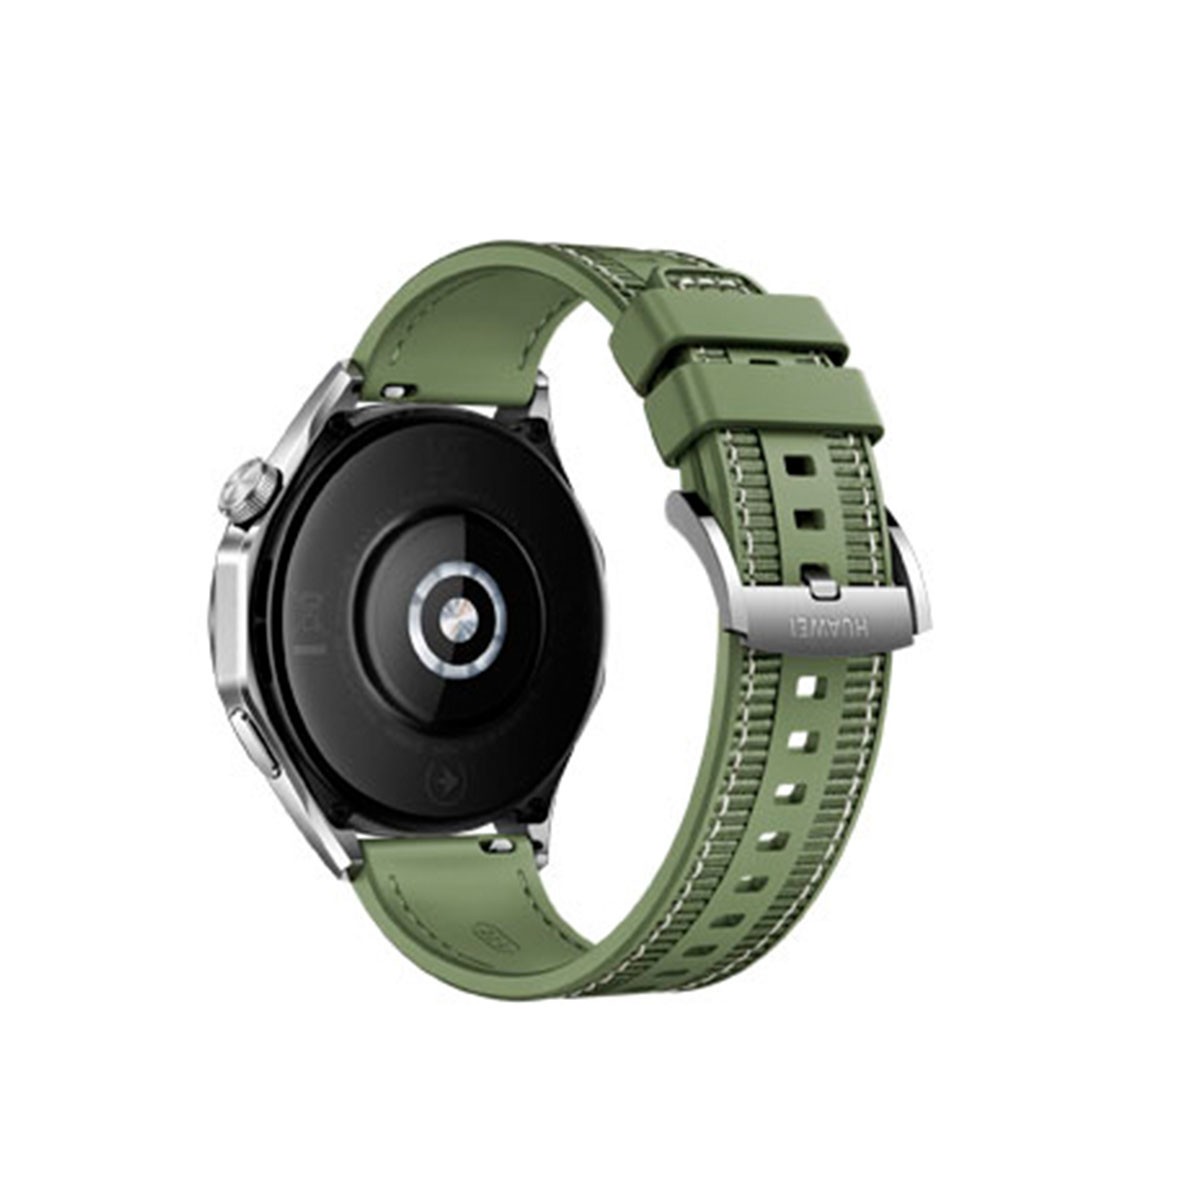 Huawei Smartwatch GT4 Phoinix 46 mm Negro